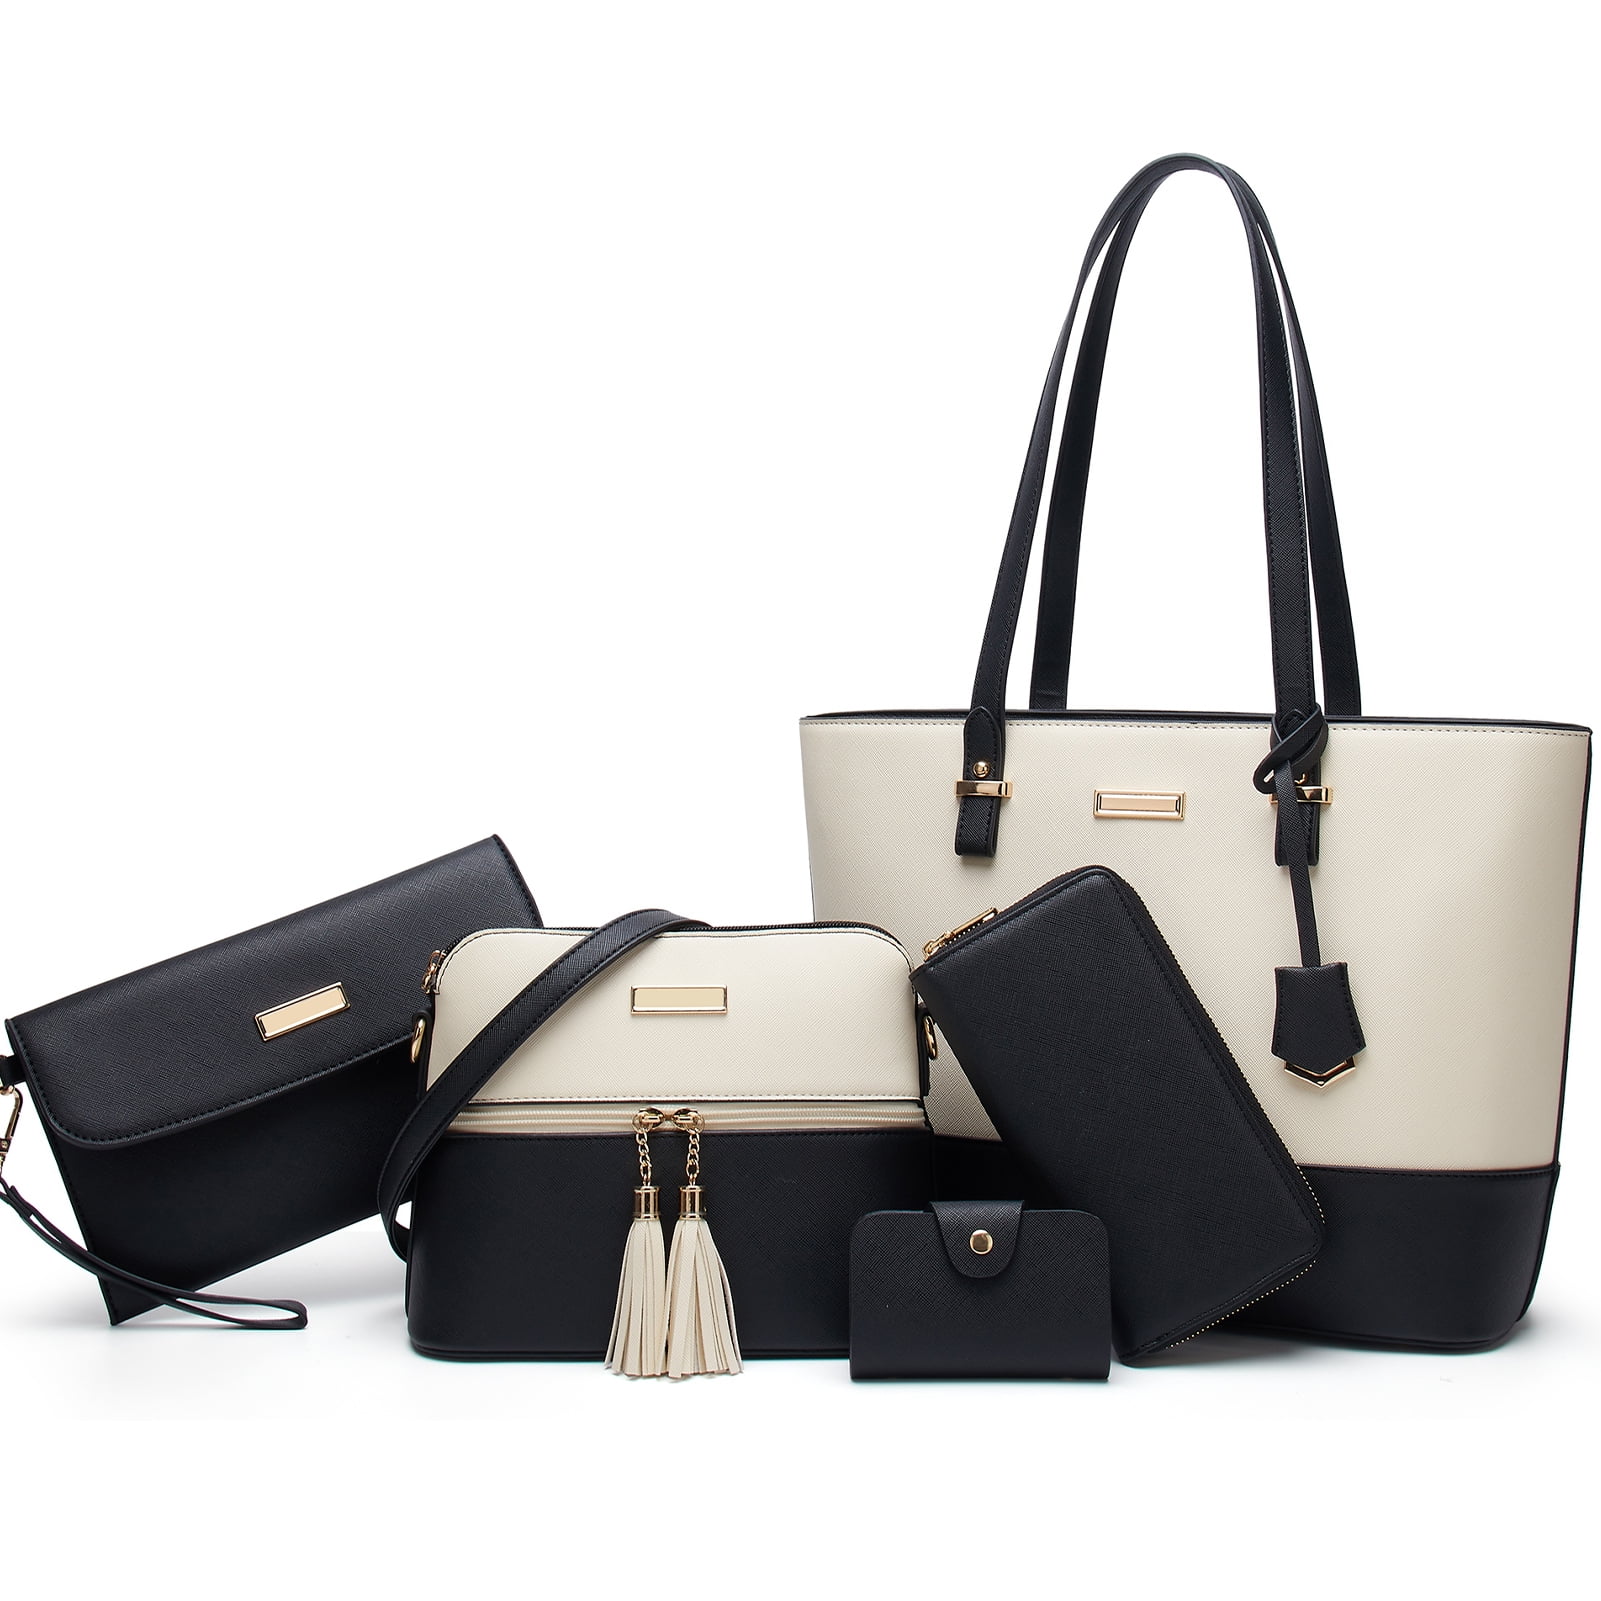 YNIQUE Satchel Purses and Handbags for Women Shoulder Tote Bags Wallets ...